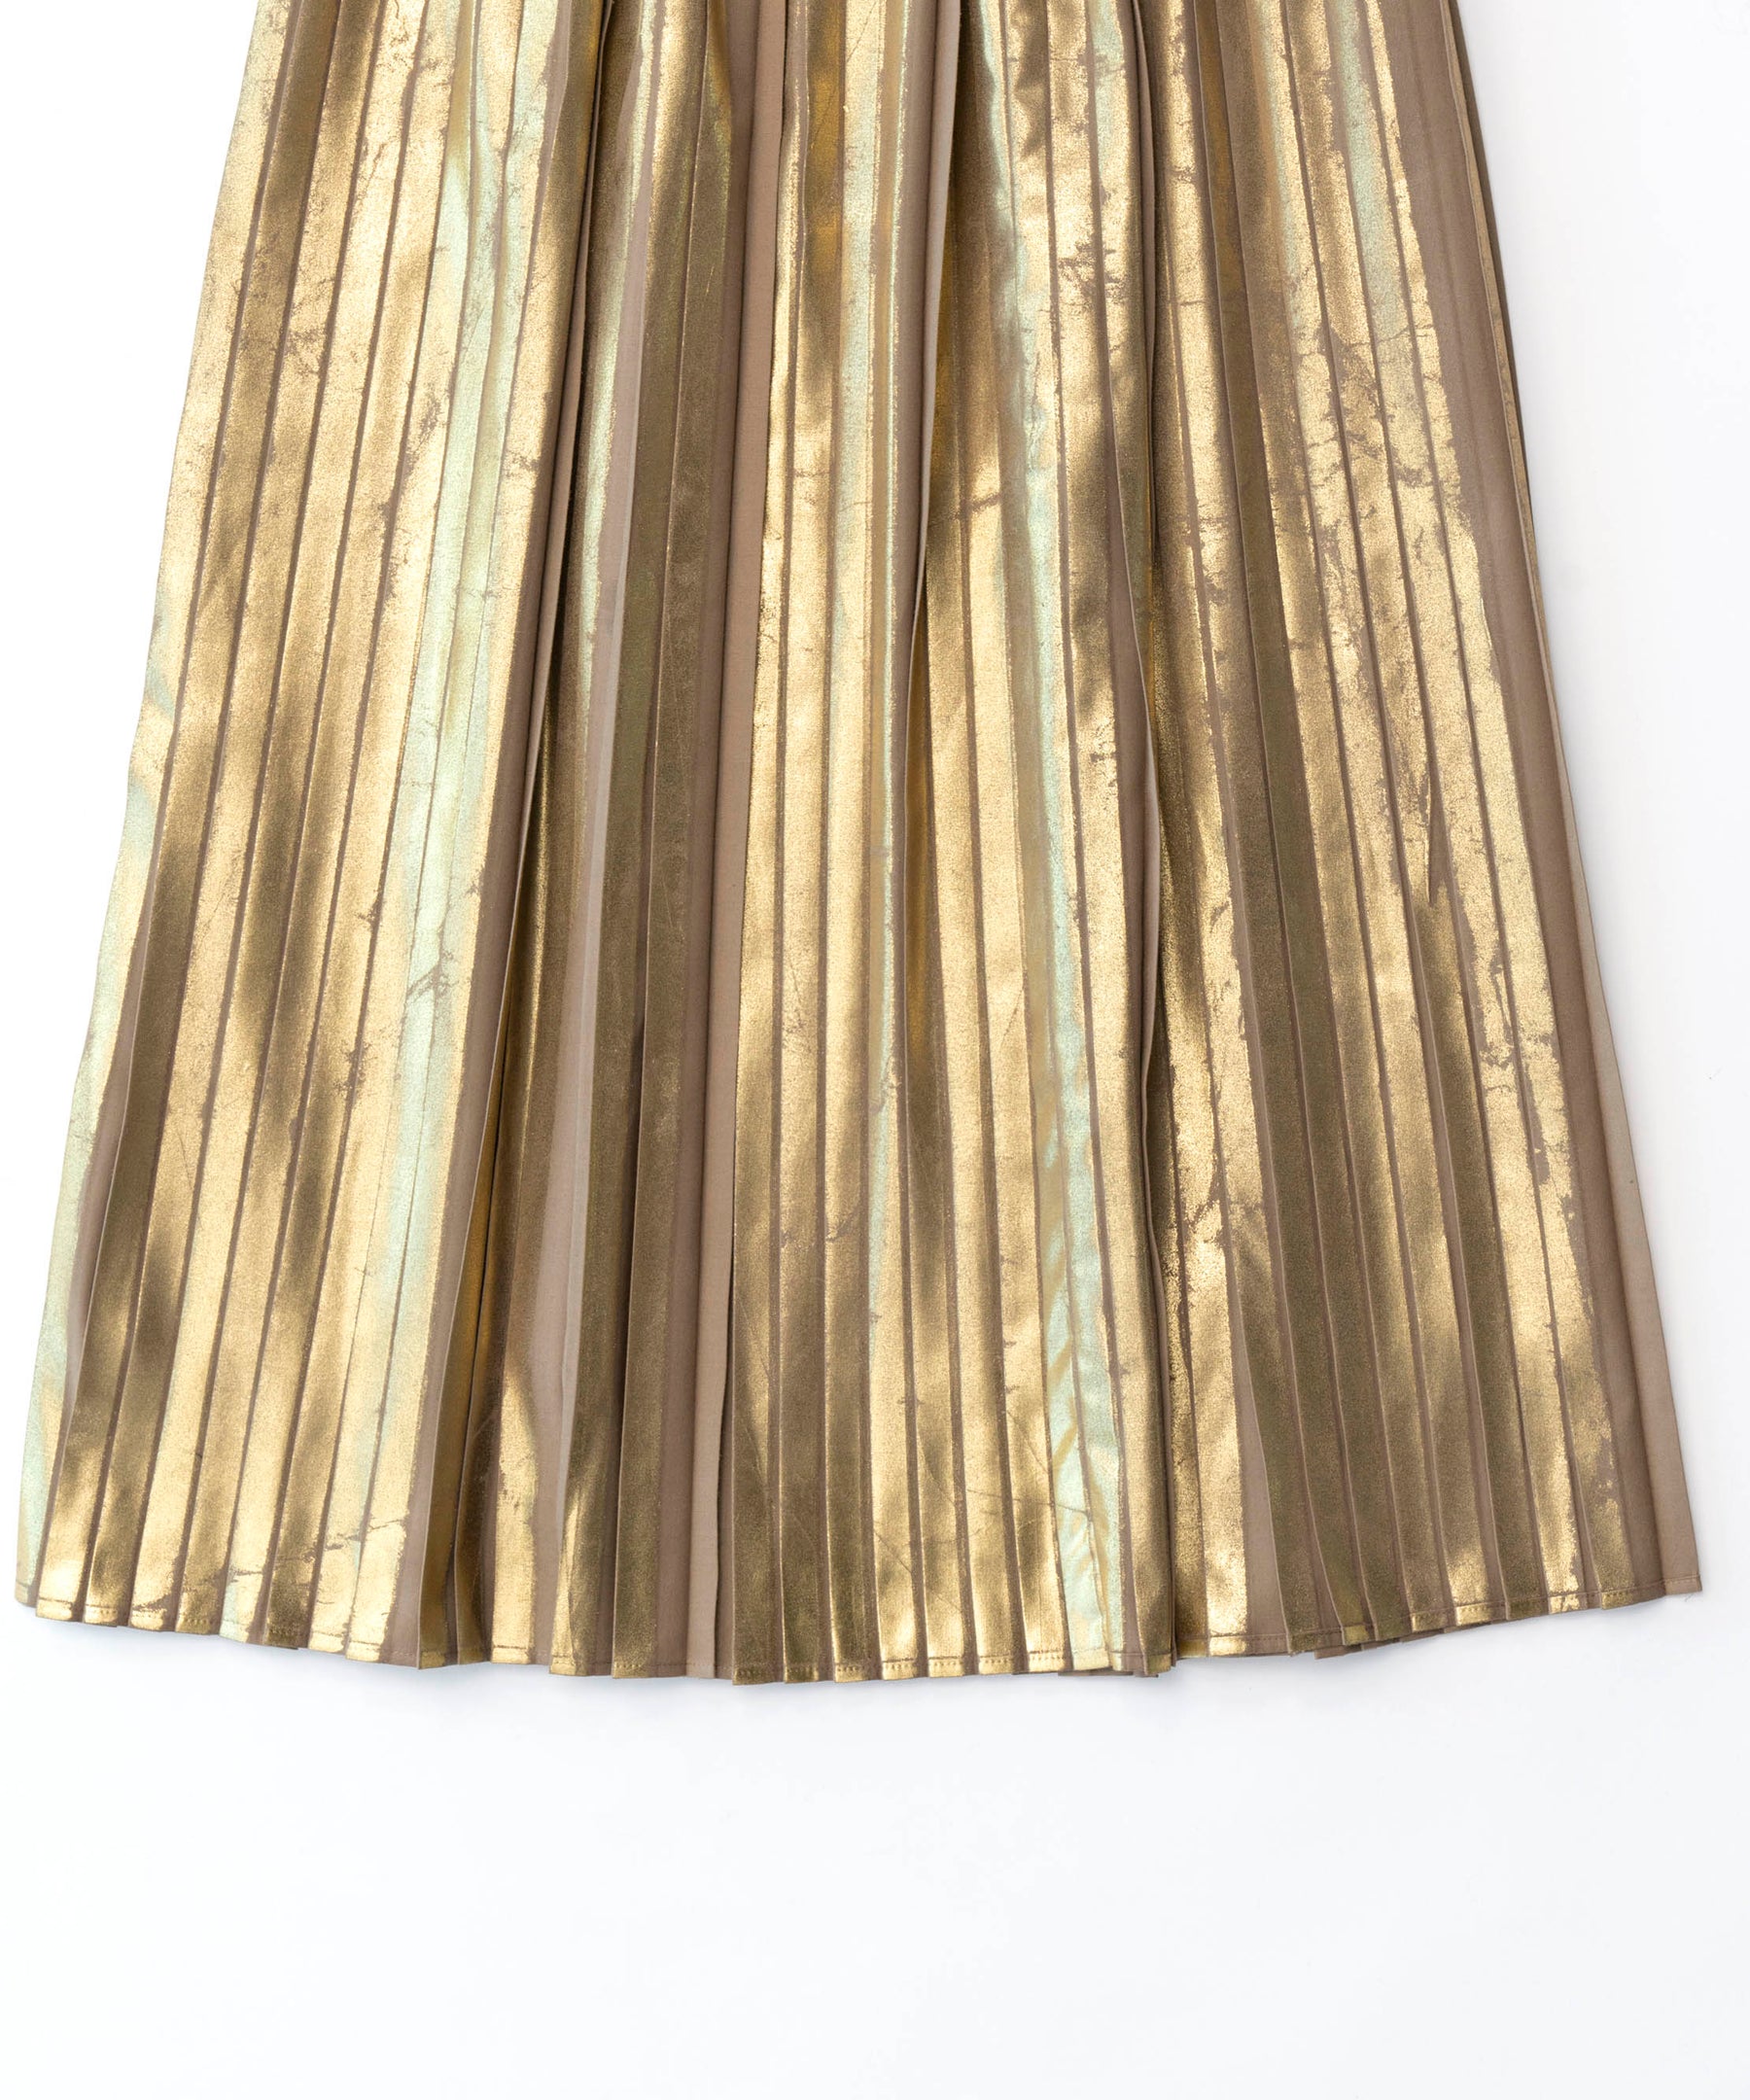 Foil Pleated Skirt